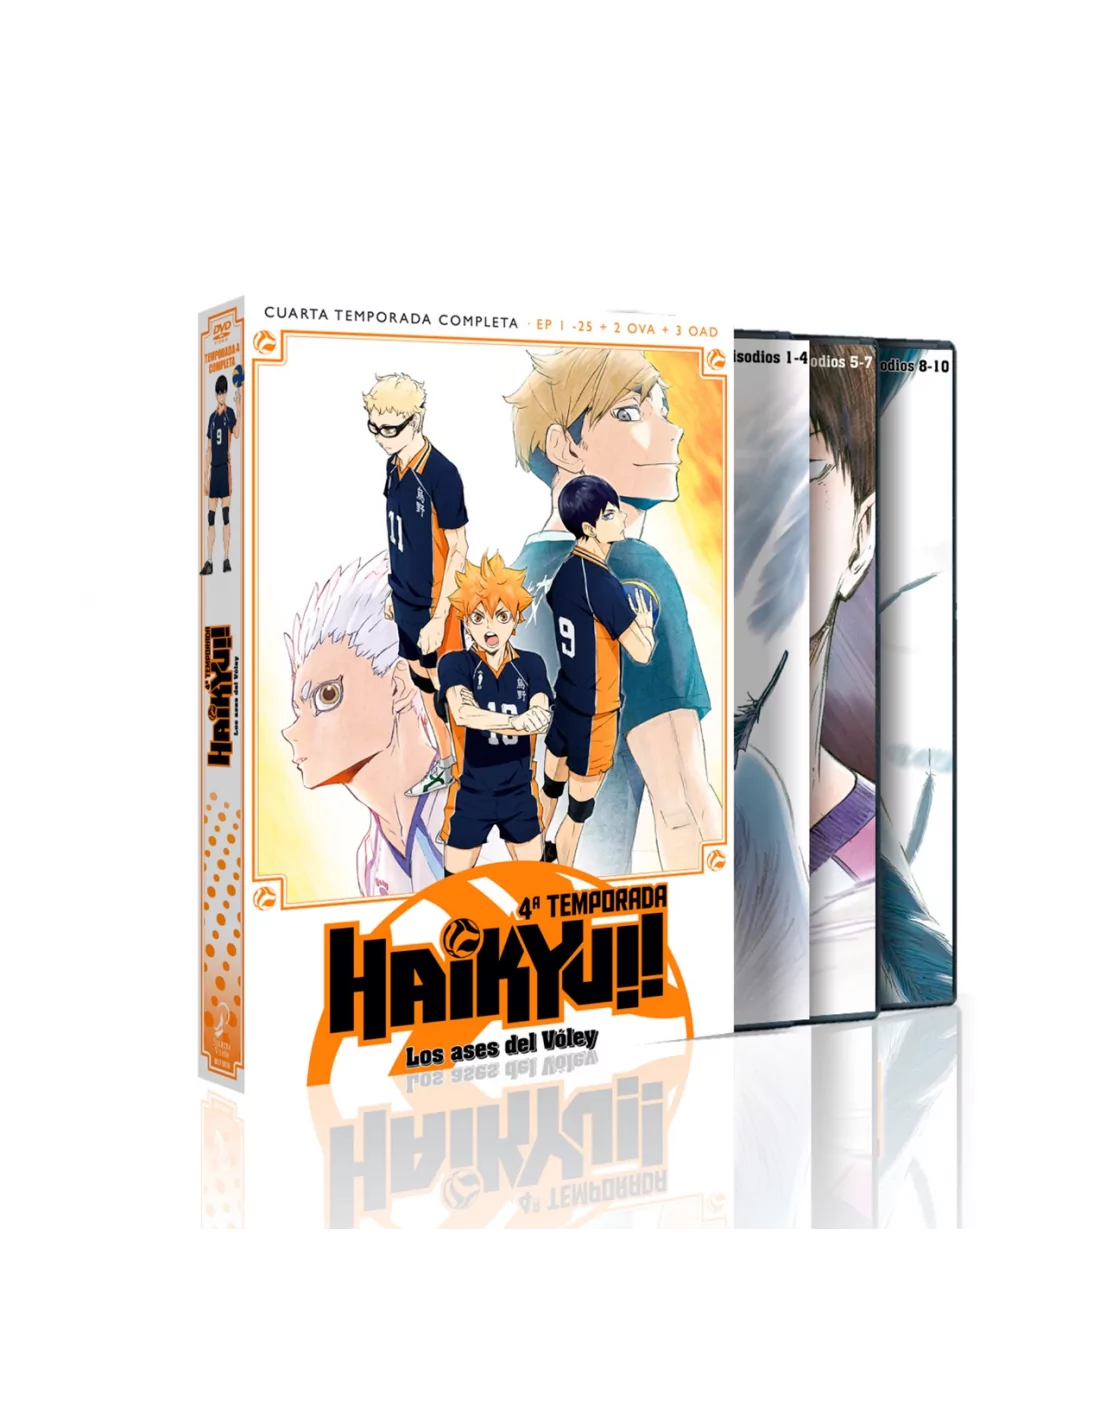 Haikyuu 4: total de episodios de la cuarta temporada de haikyuu to the top  anime y manga español online por crunchhyroll, anime flv, Animes